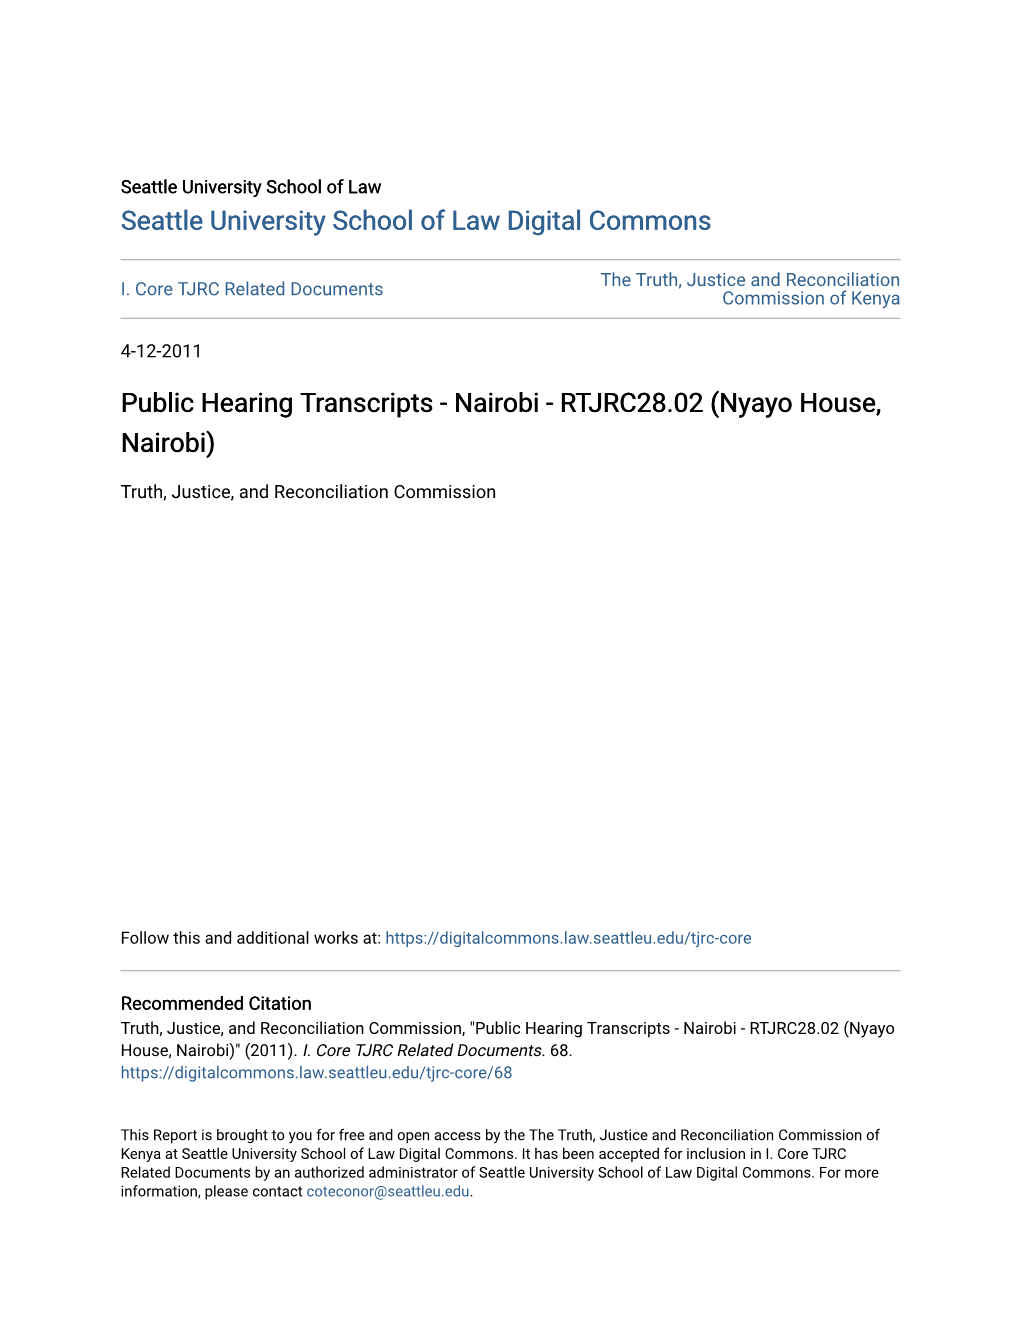 Public Hearing Transcripts - Nairobi - RTJRC28.02 (Nyayo House, Nairobi)